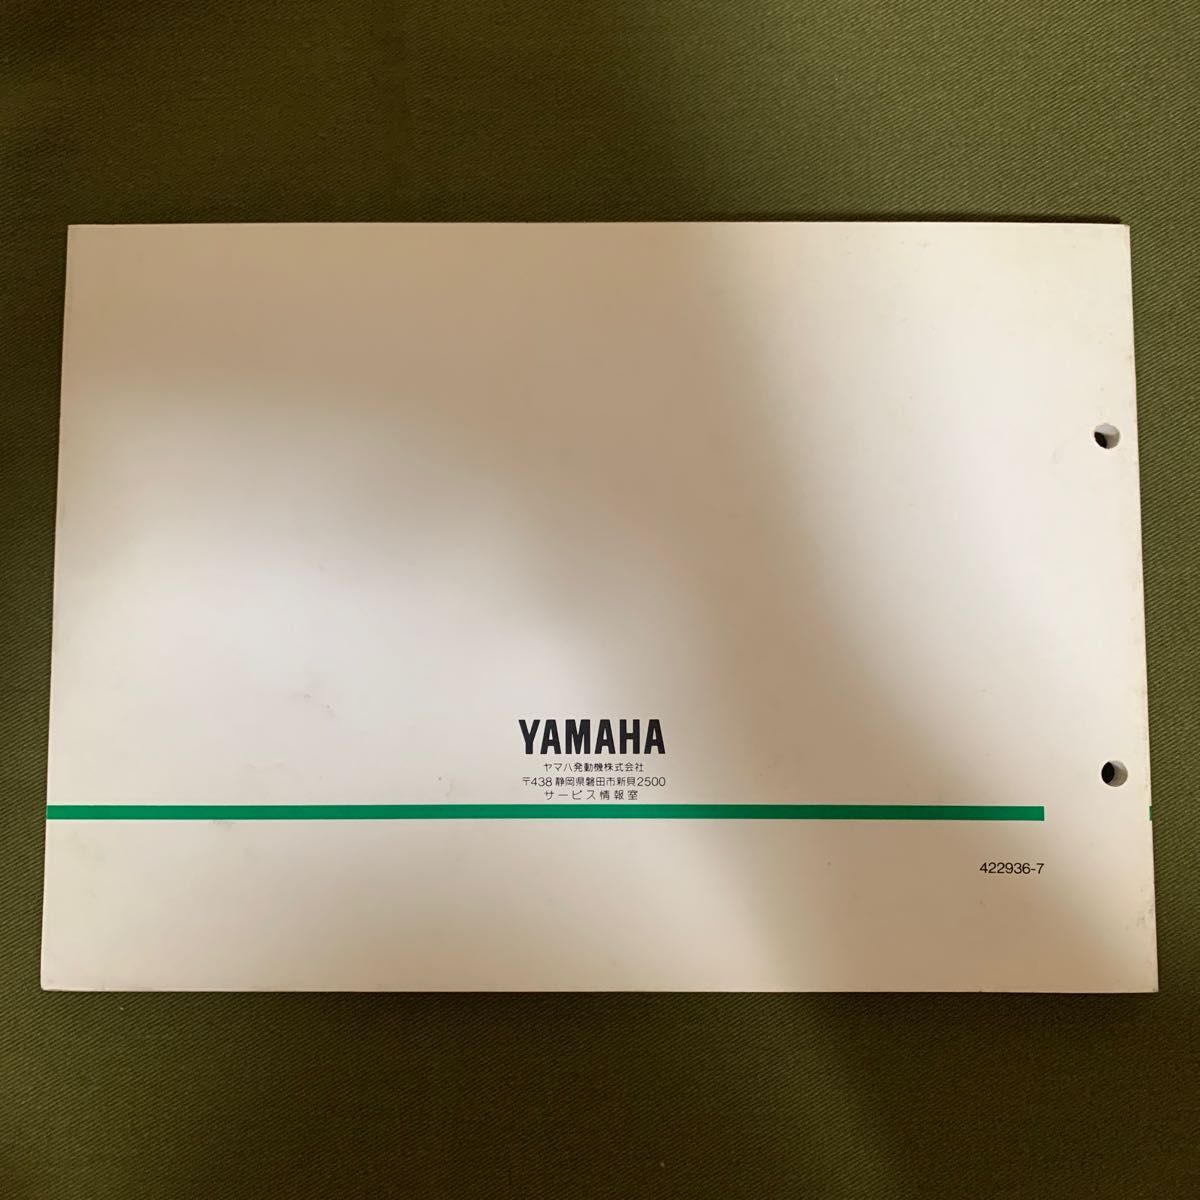 　YAMAHA ミント SH50 3HK2 パーツカタログ メーカー希望小売価格表